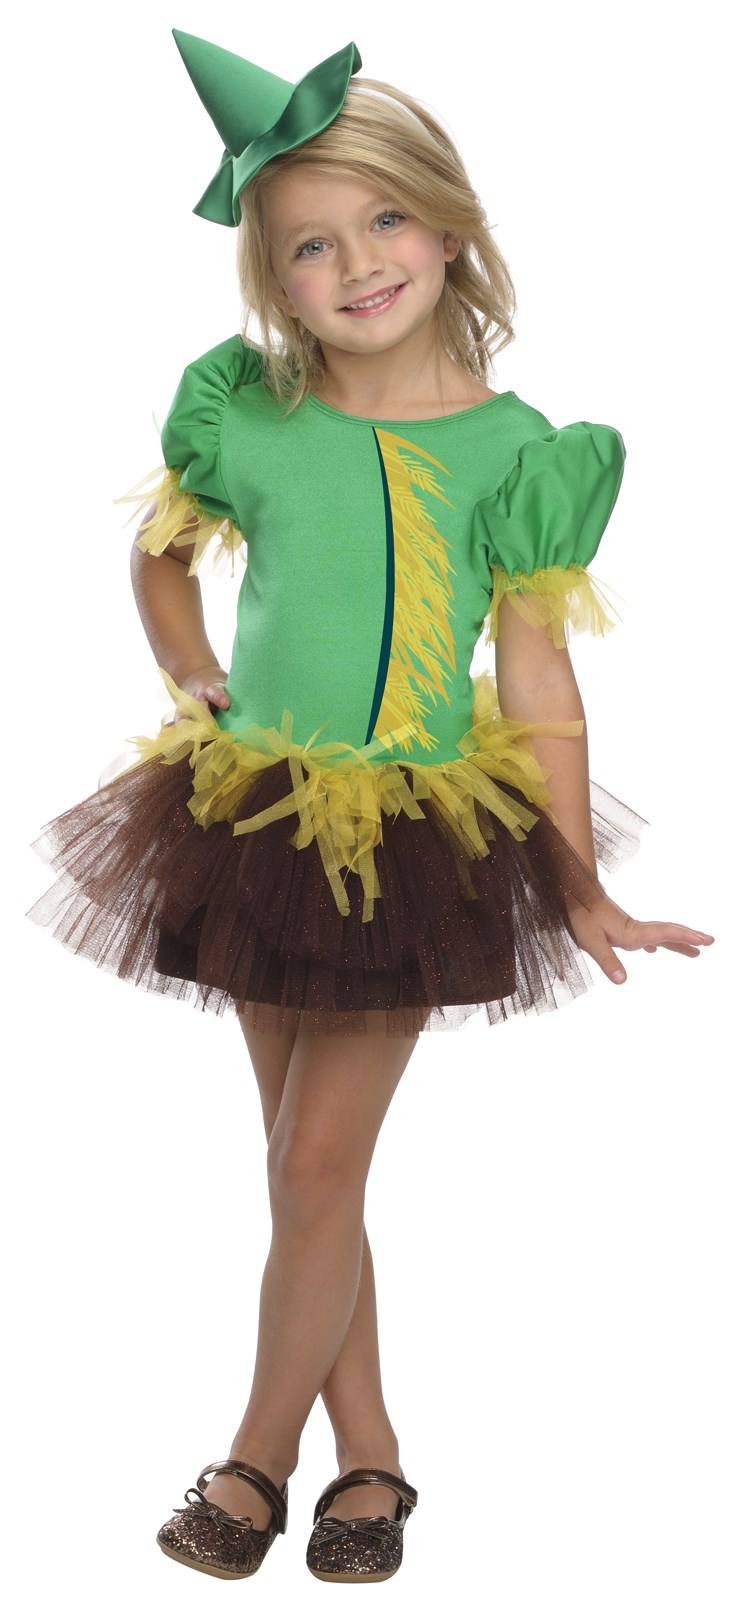 Wizard of Oz - Scarecrow Tutu Girls Costume